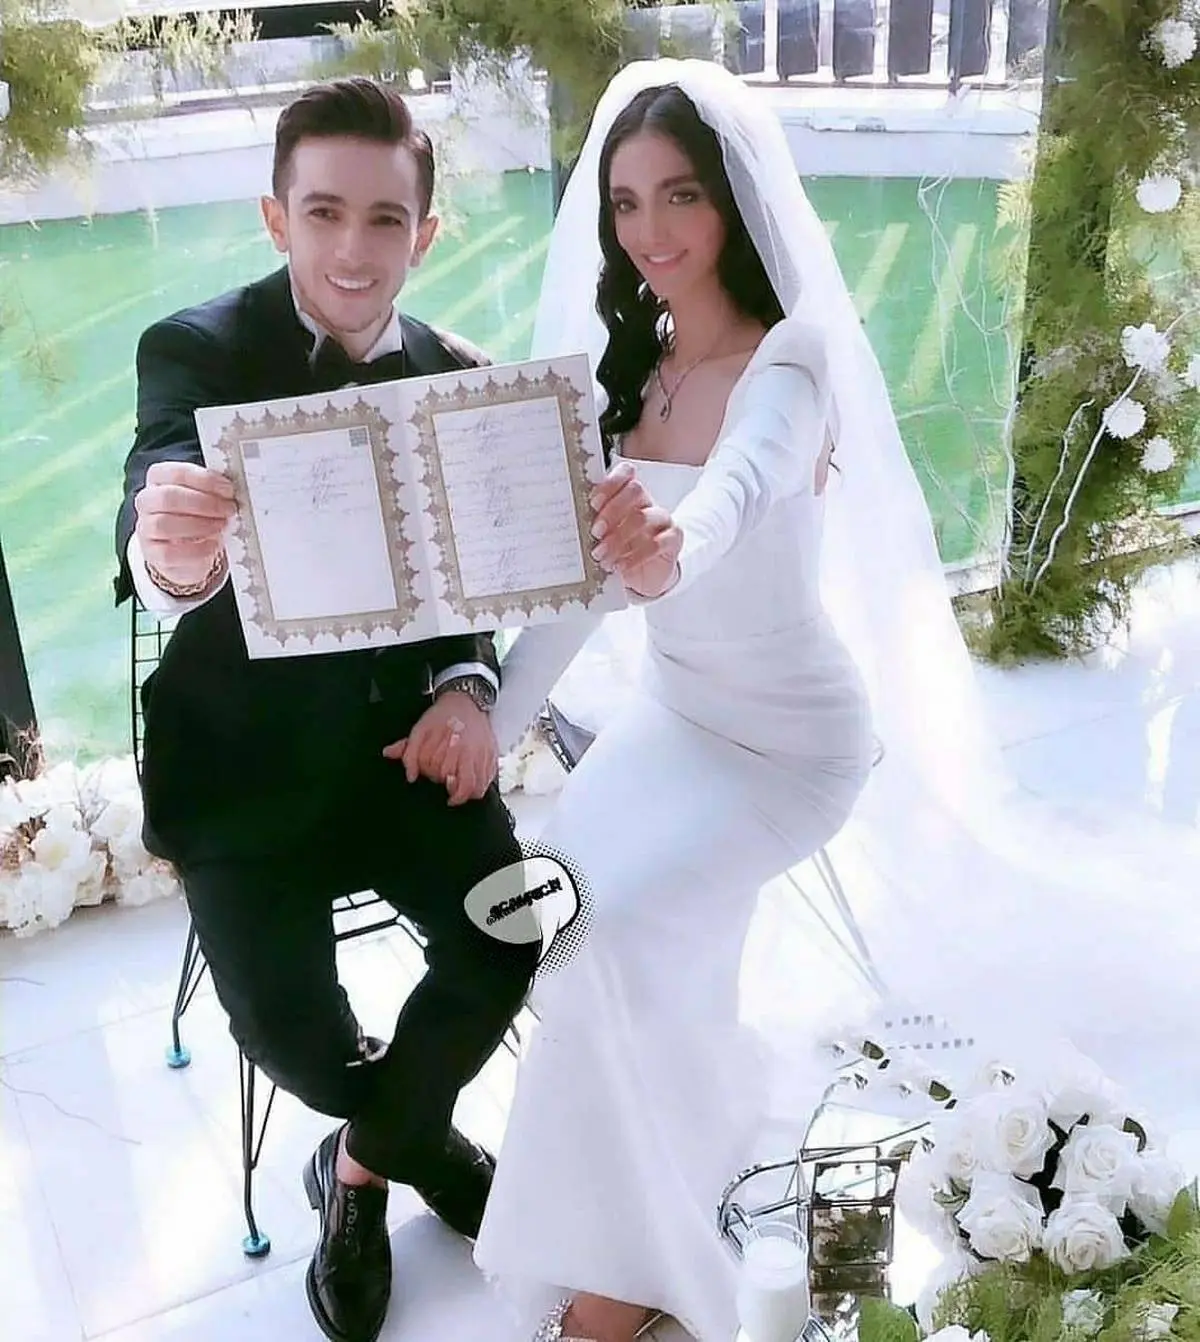 فرشاد احمدزاده فوتبالیست مشهور ازدواج کرد + عکس همسرش